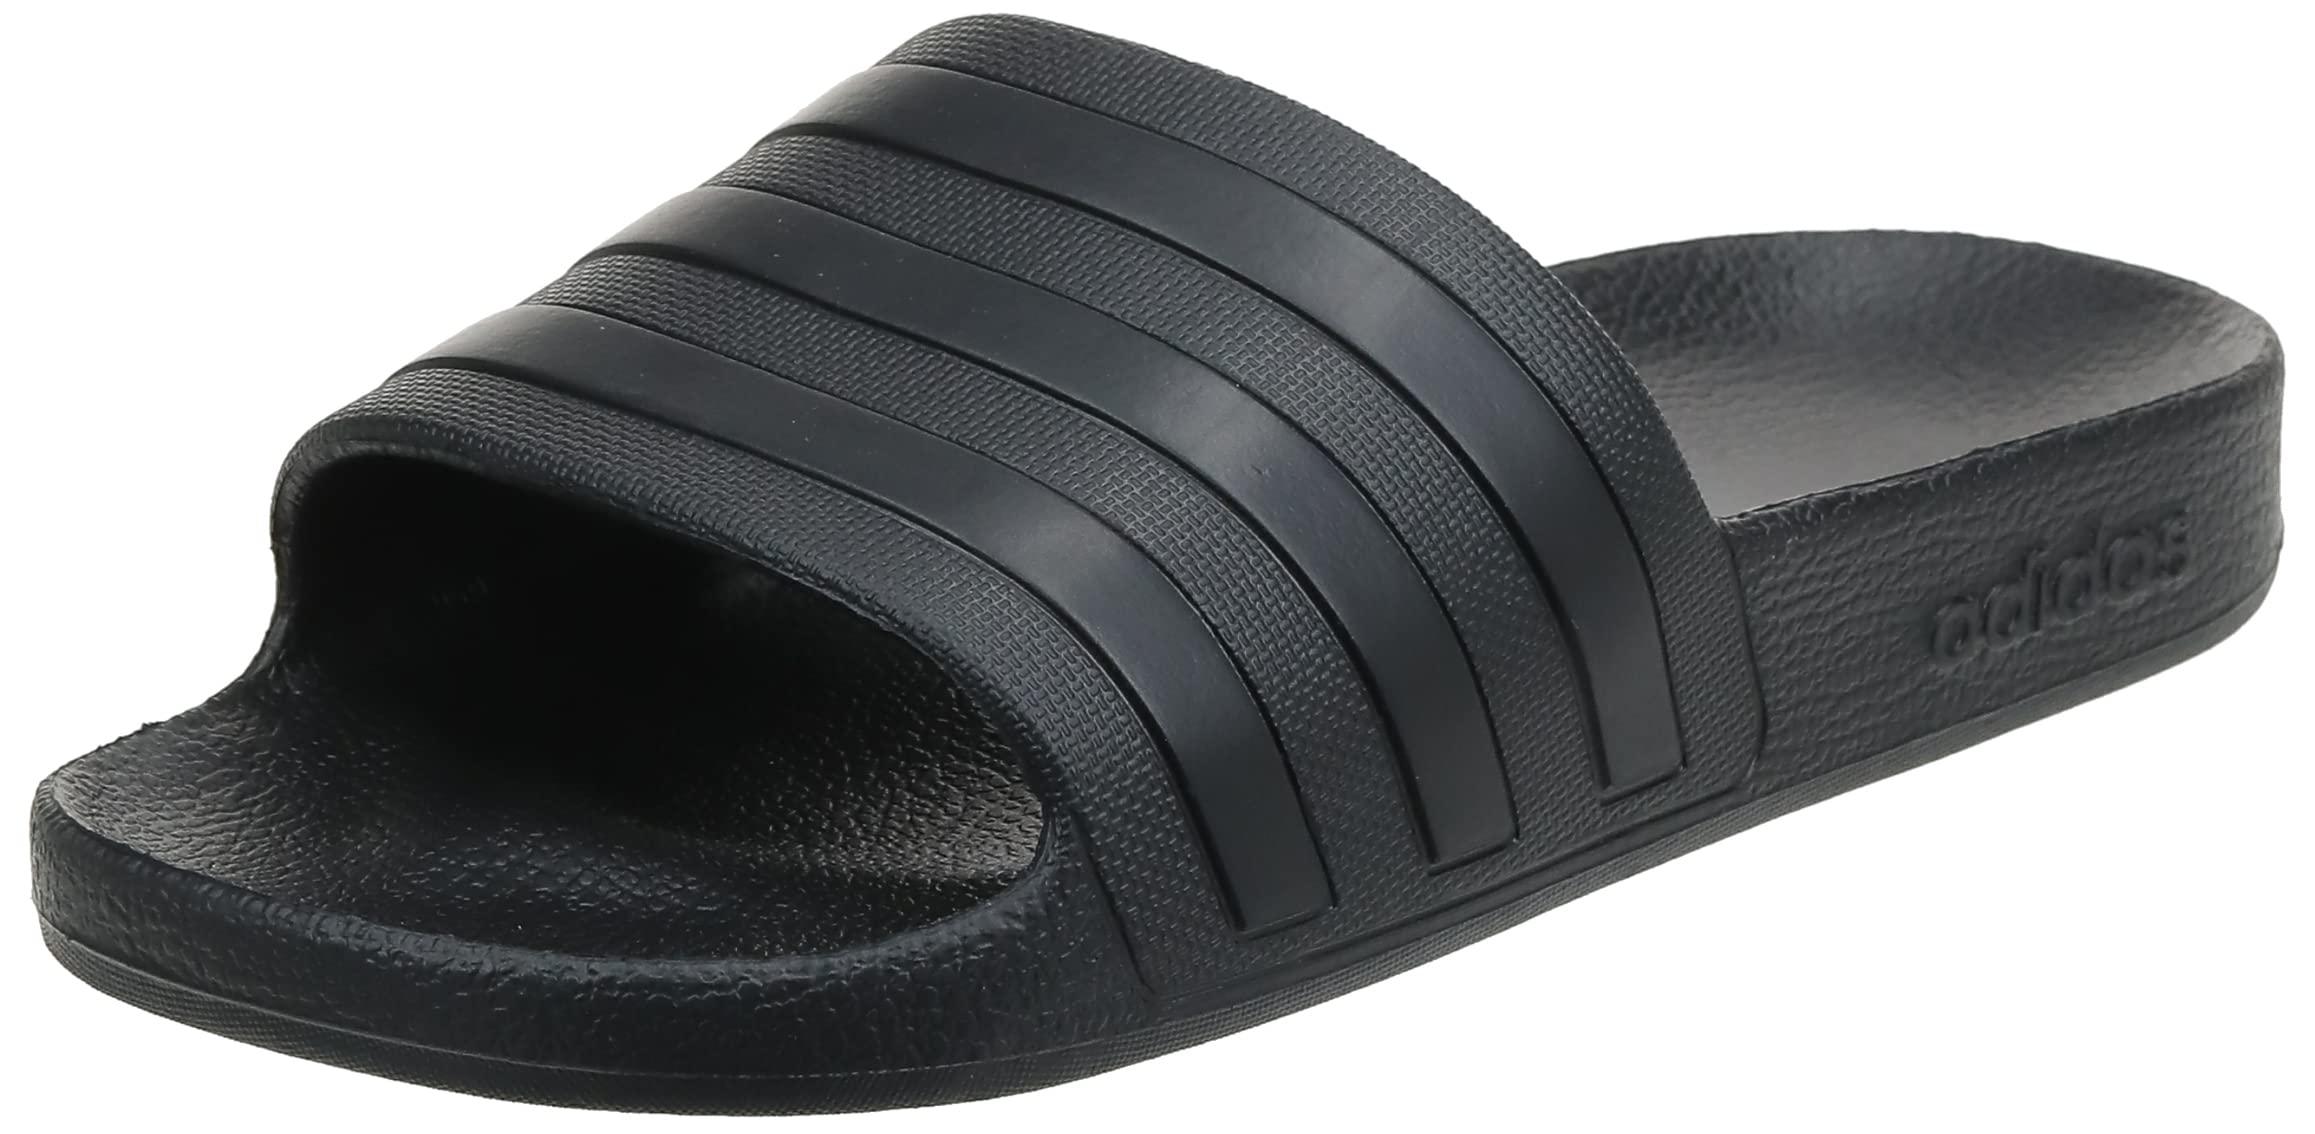 adidas Adilette Slide in Black/Black/Black (Black) - Save 71% | Lyst